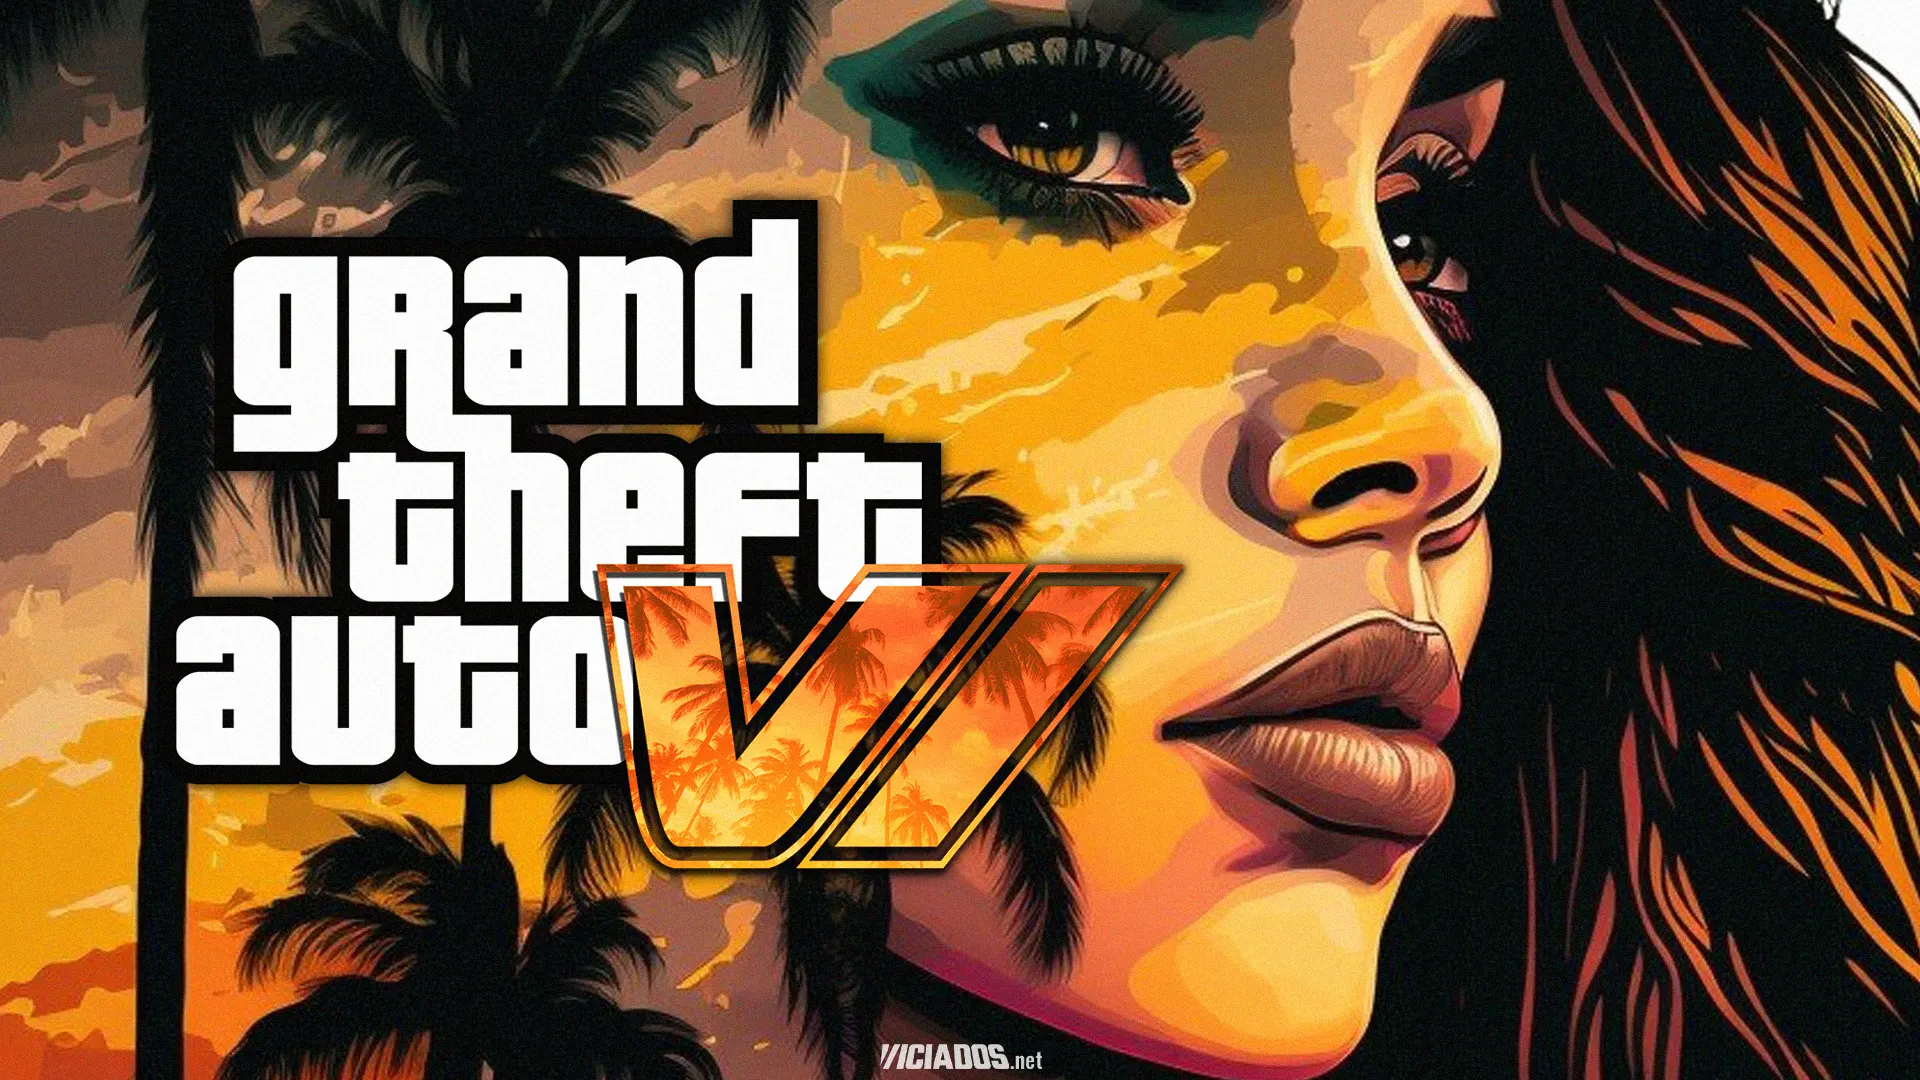 GTA 6 | Tom Henderson comenta sobre o trailer de Grand Theft Auto VI 2023 Viciados